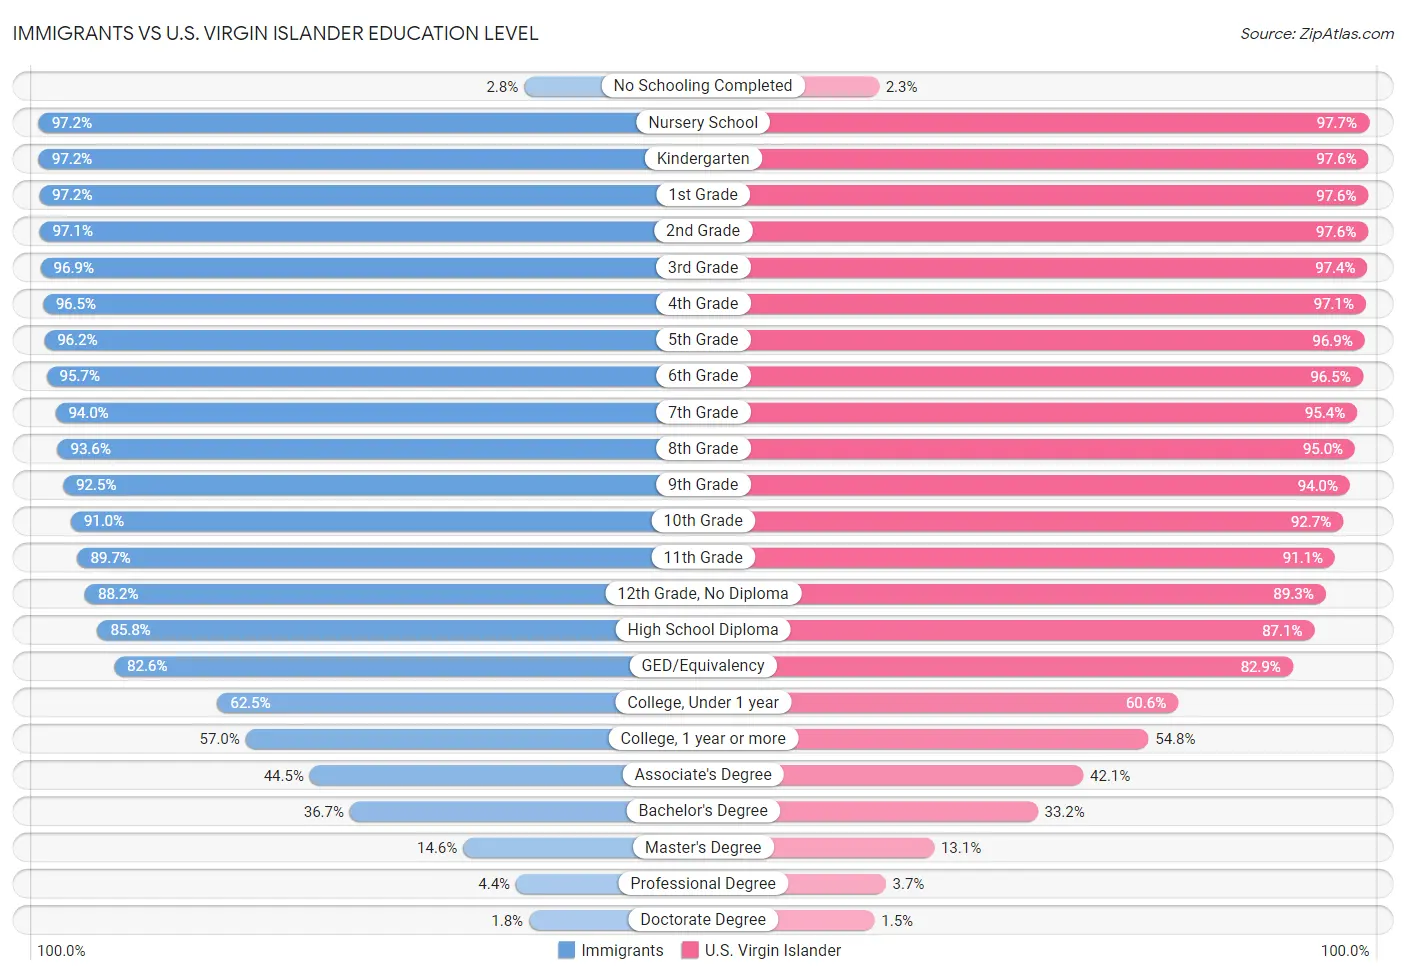 Immigrants vs U.S. Virgin Islander Education Level